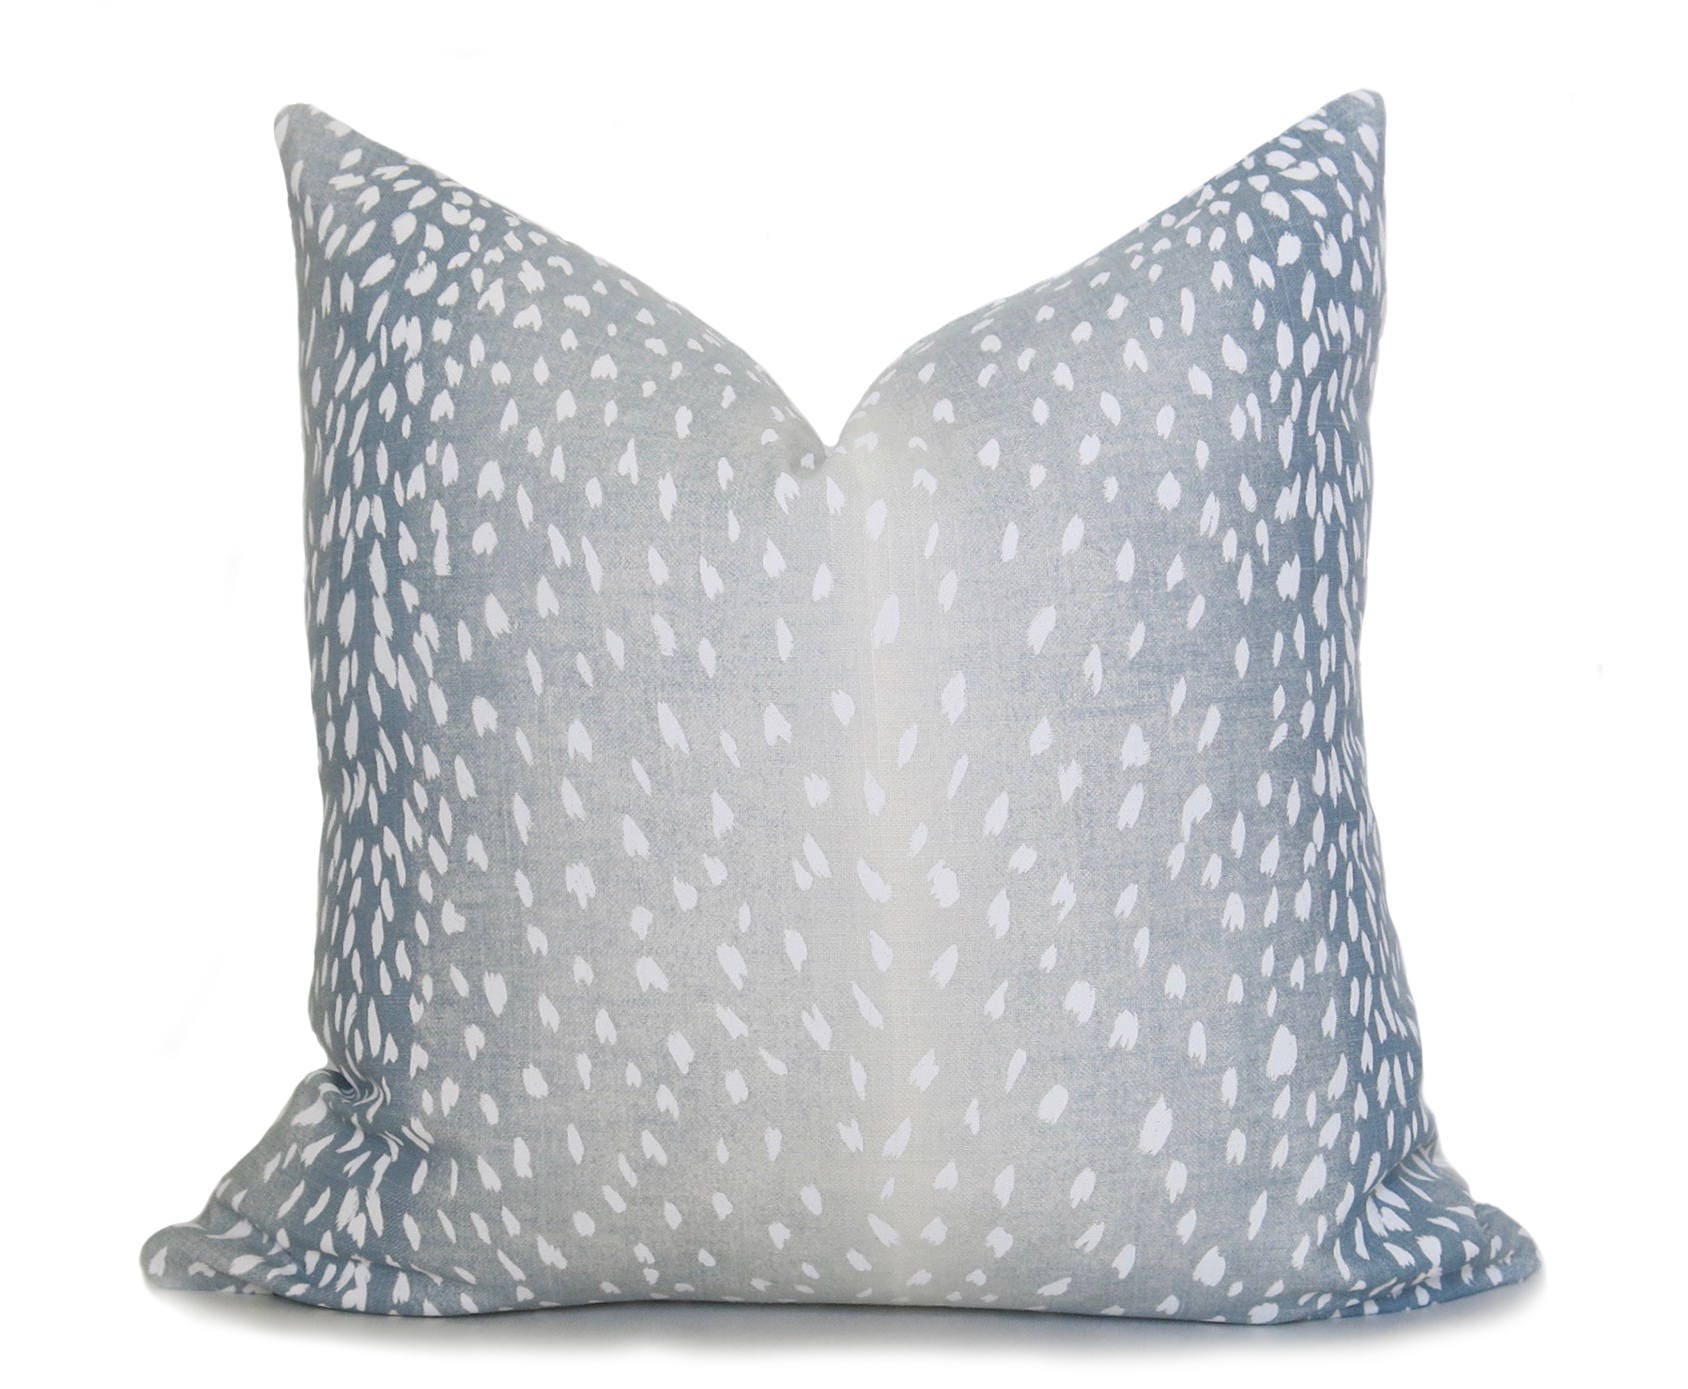 Antelope Pillow Cover - Spa Blue